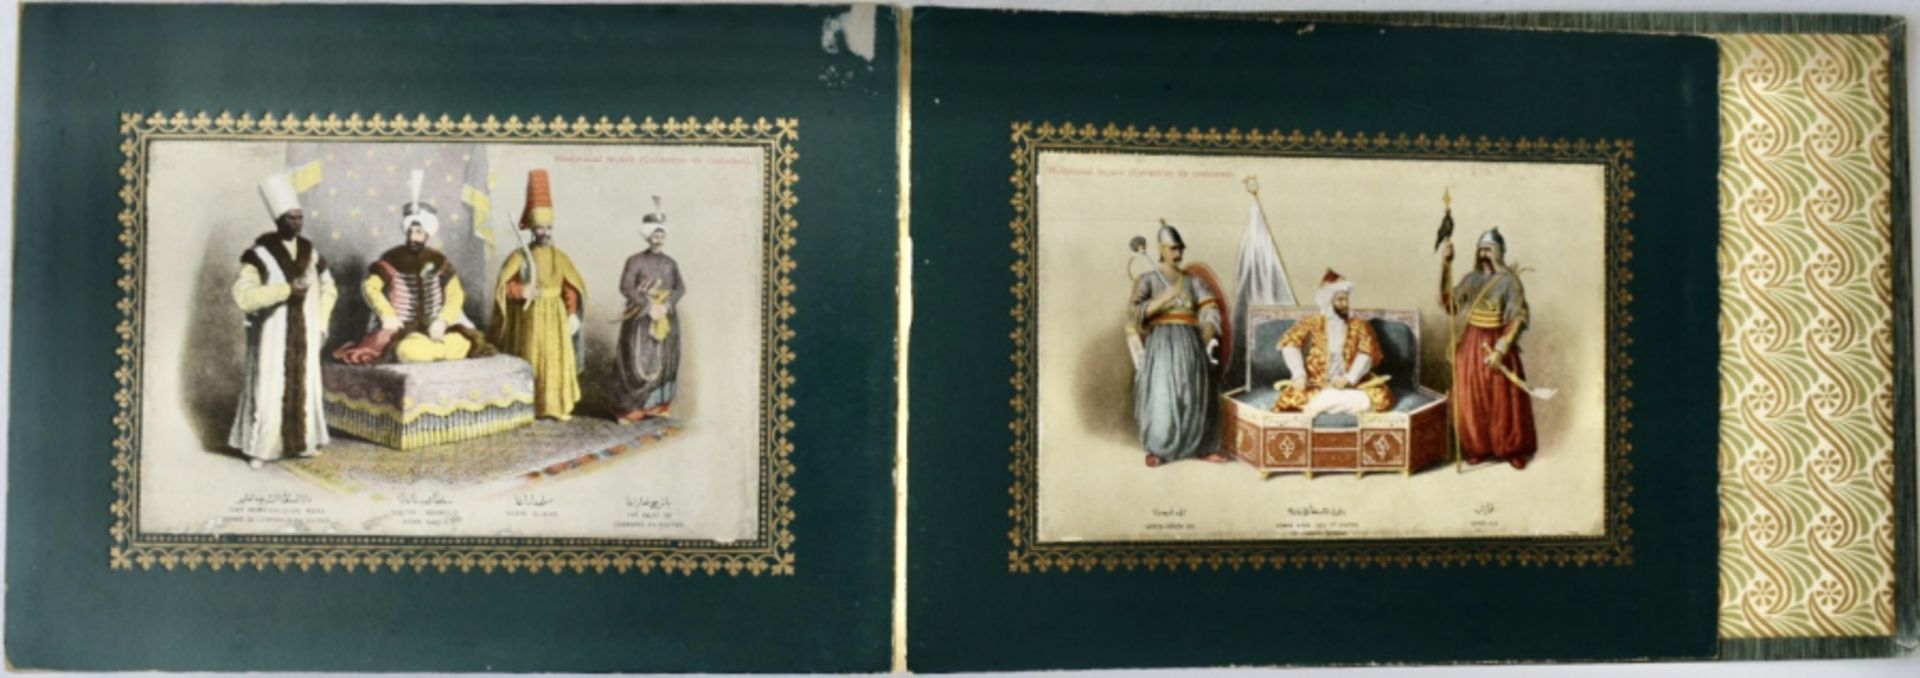 Album of Ottoman Costumes - Image 5 of 10